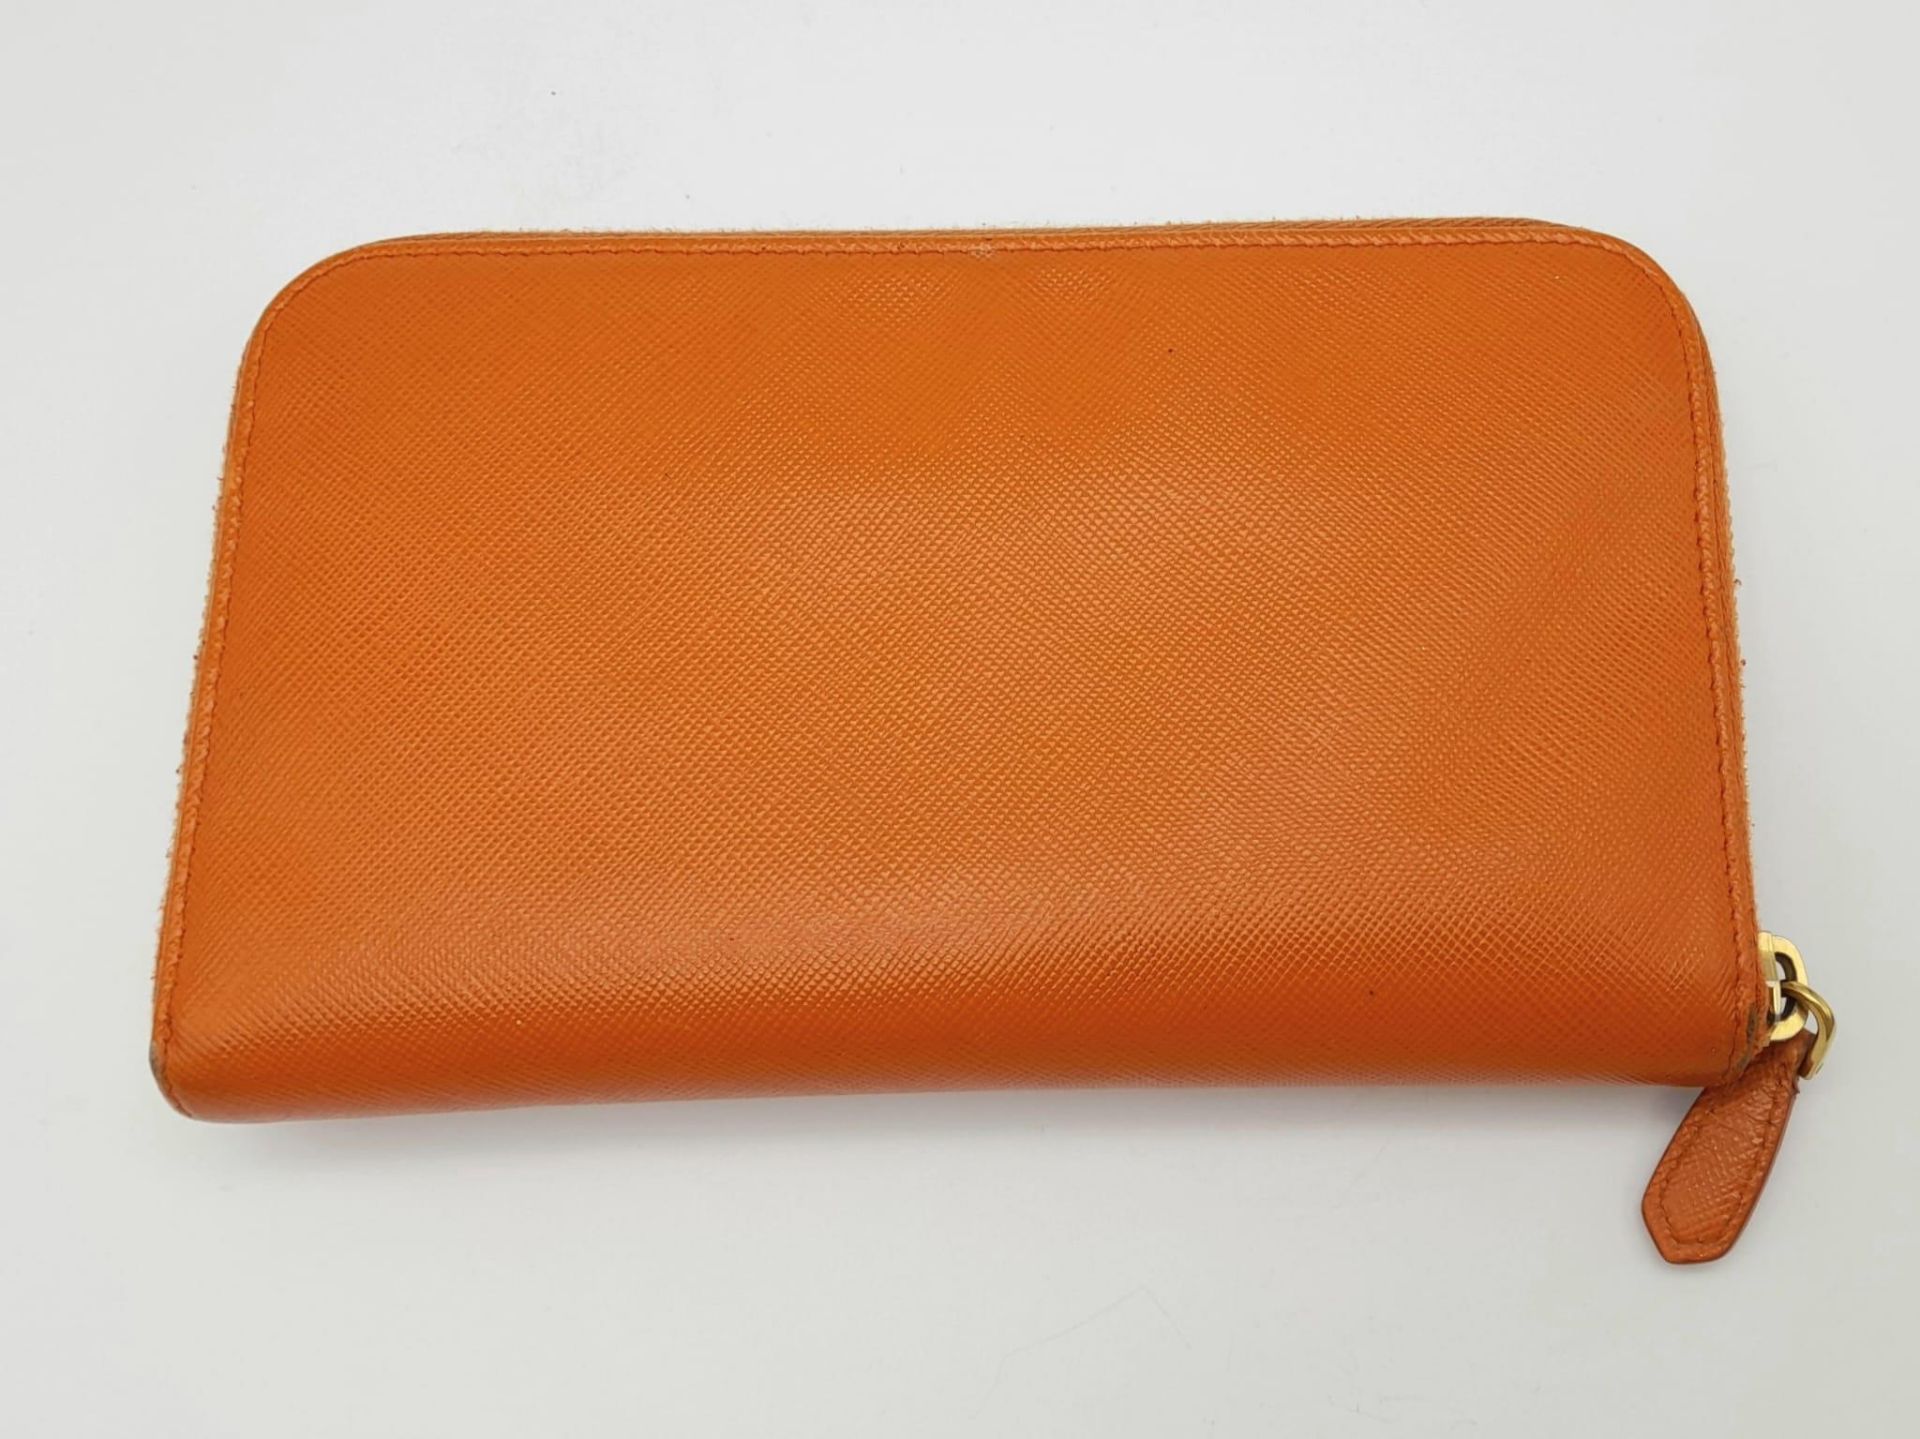 A Prada Burnt Orange Leather Wallet/Clutch. Gilded touches. Spacious interior.Textile and leather - Bild 4 aus 11